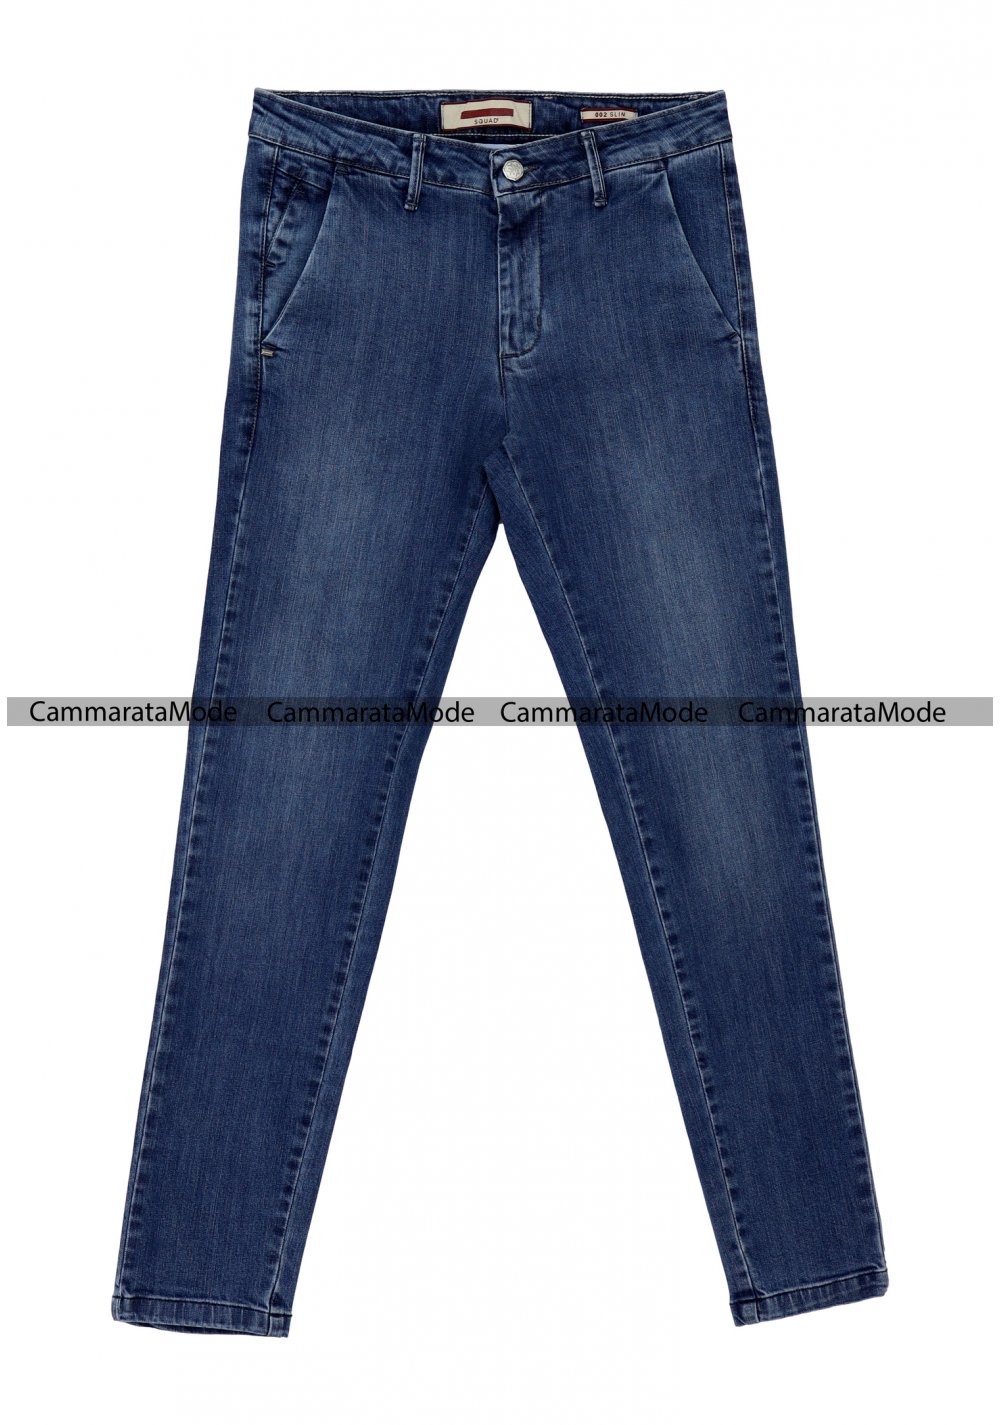 Squad2 uomo BALVIN - jeans denim tasche america, slim fit tessuto elastico